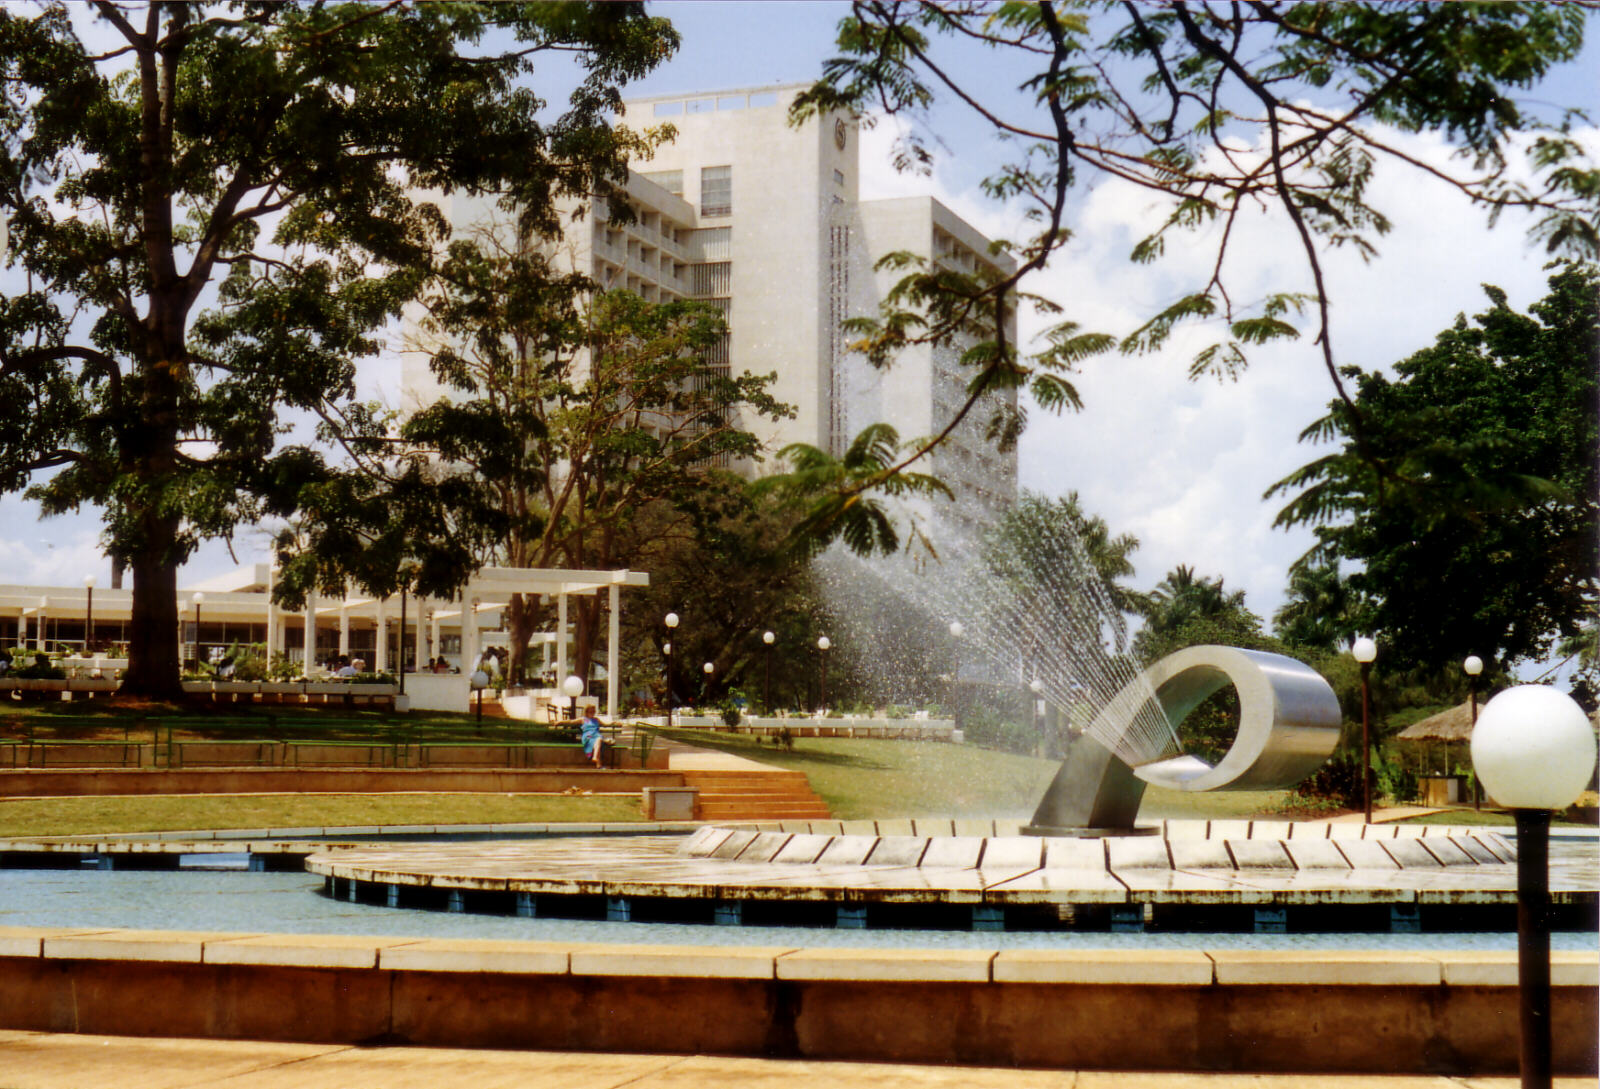 The spinning fountain outside the Sheraton hotel in Kampala, Uganda